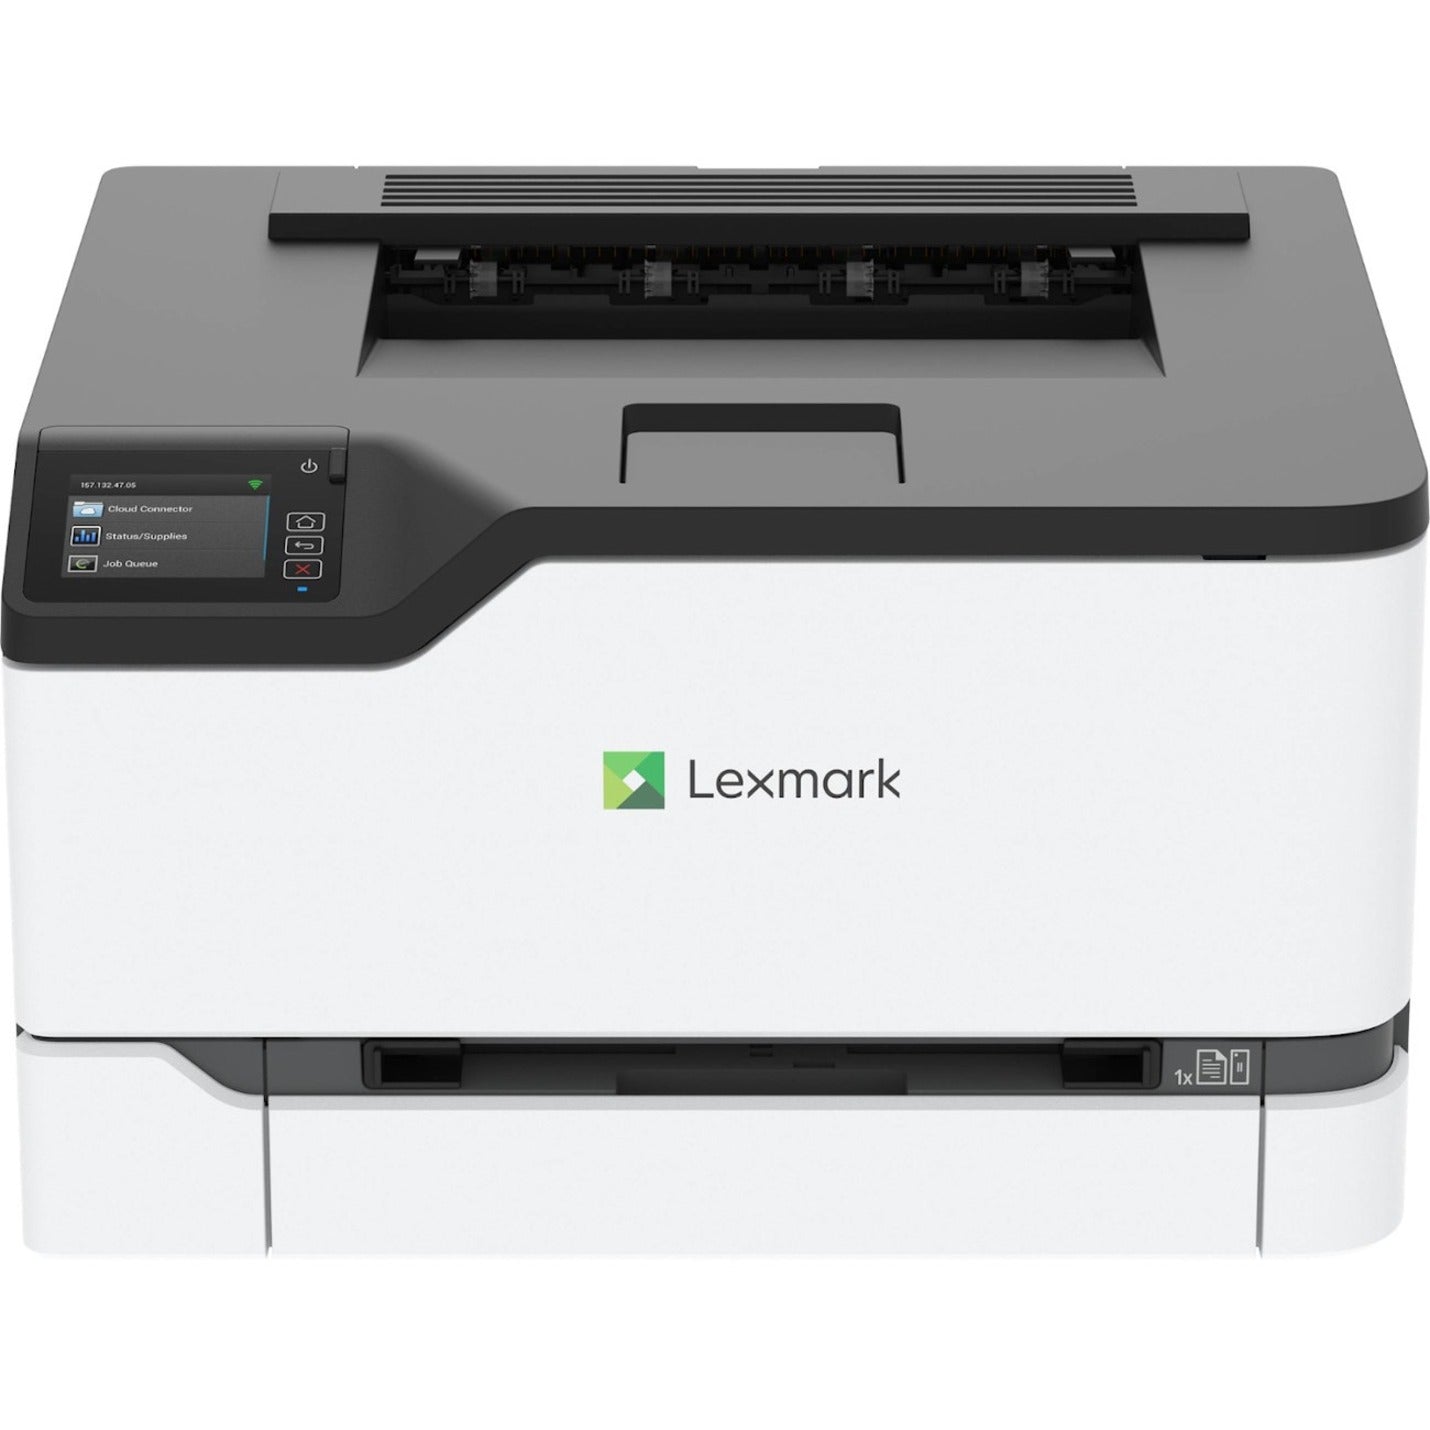 Lexmark 40N9320 CS431dw Color Laser Printer, Wireless, Duplex Printing, 26 ppm